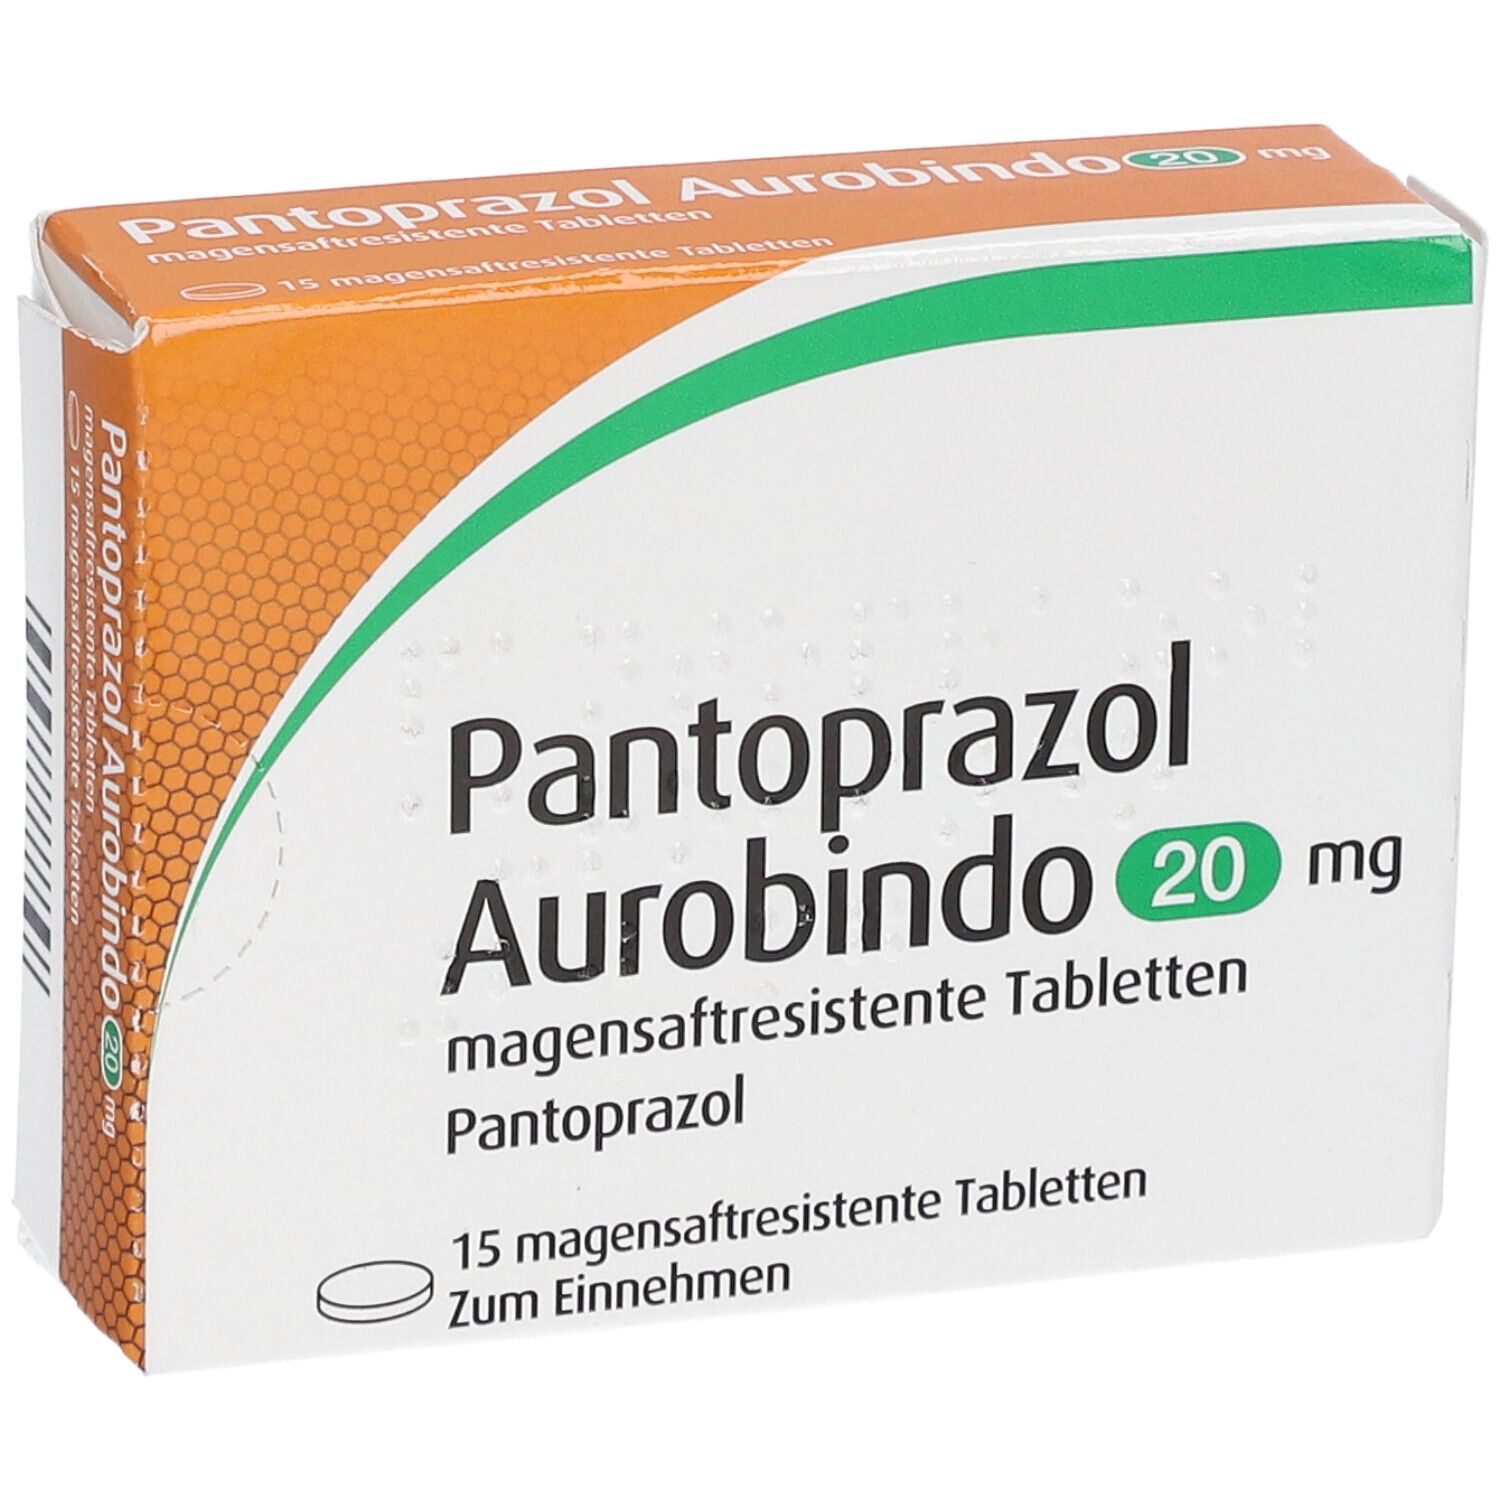 Pantoprazol Aurobindo 20 mg